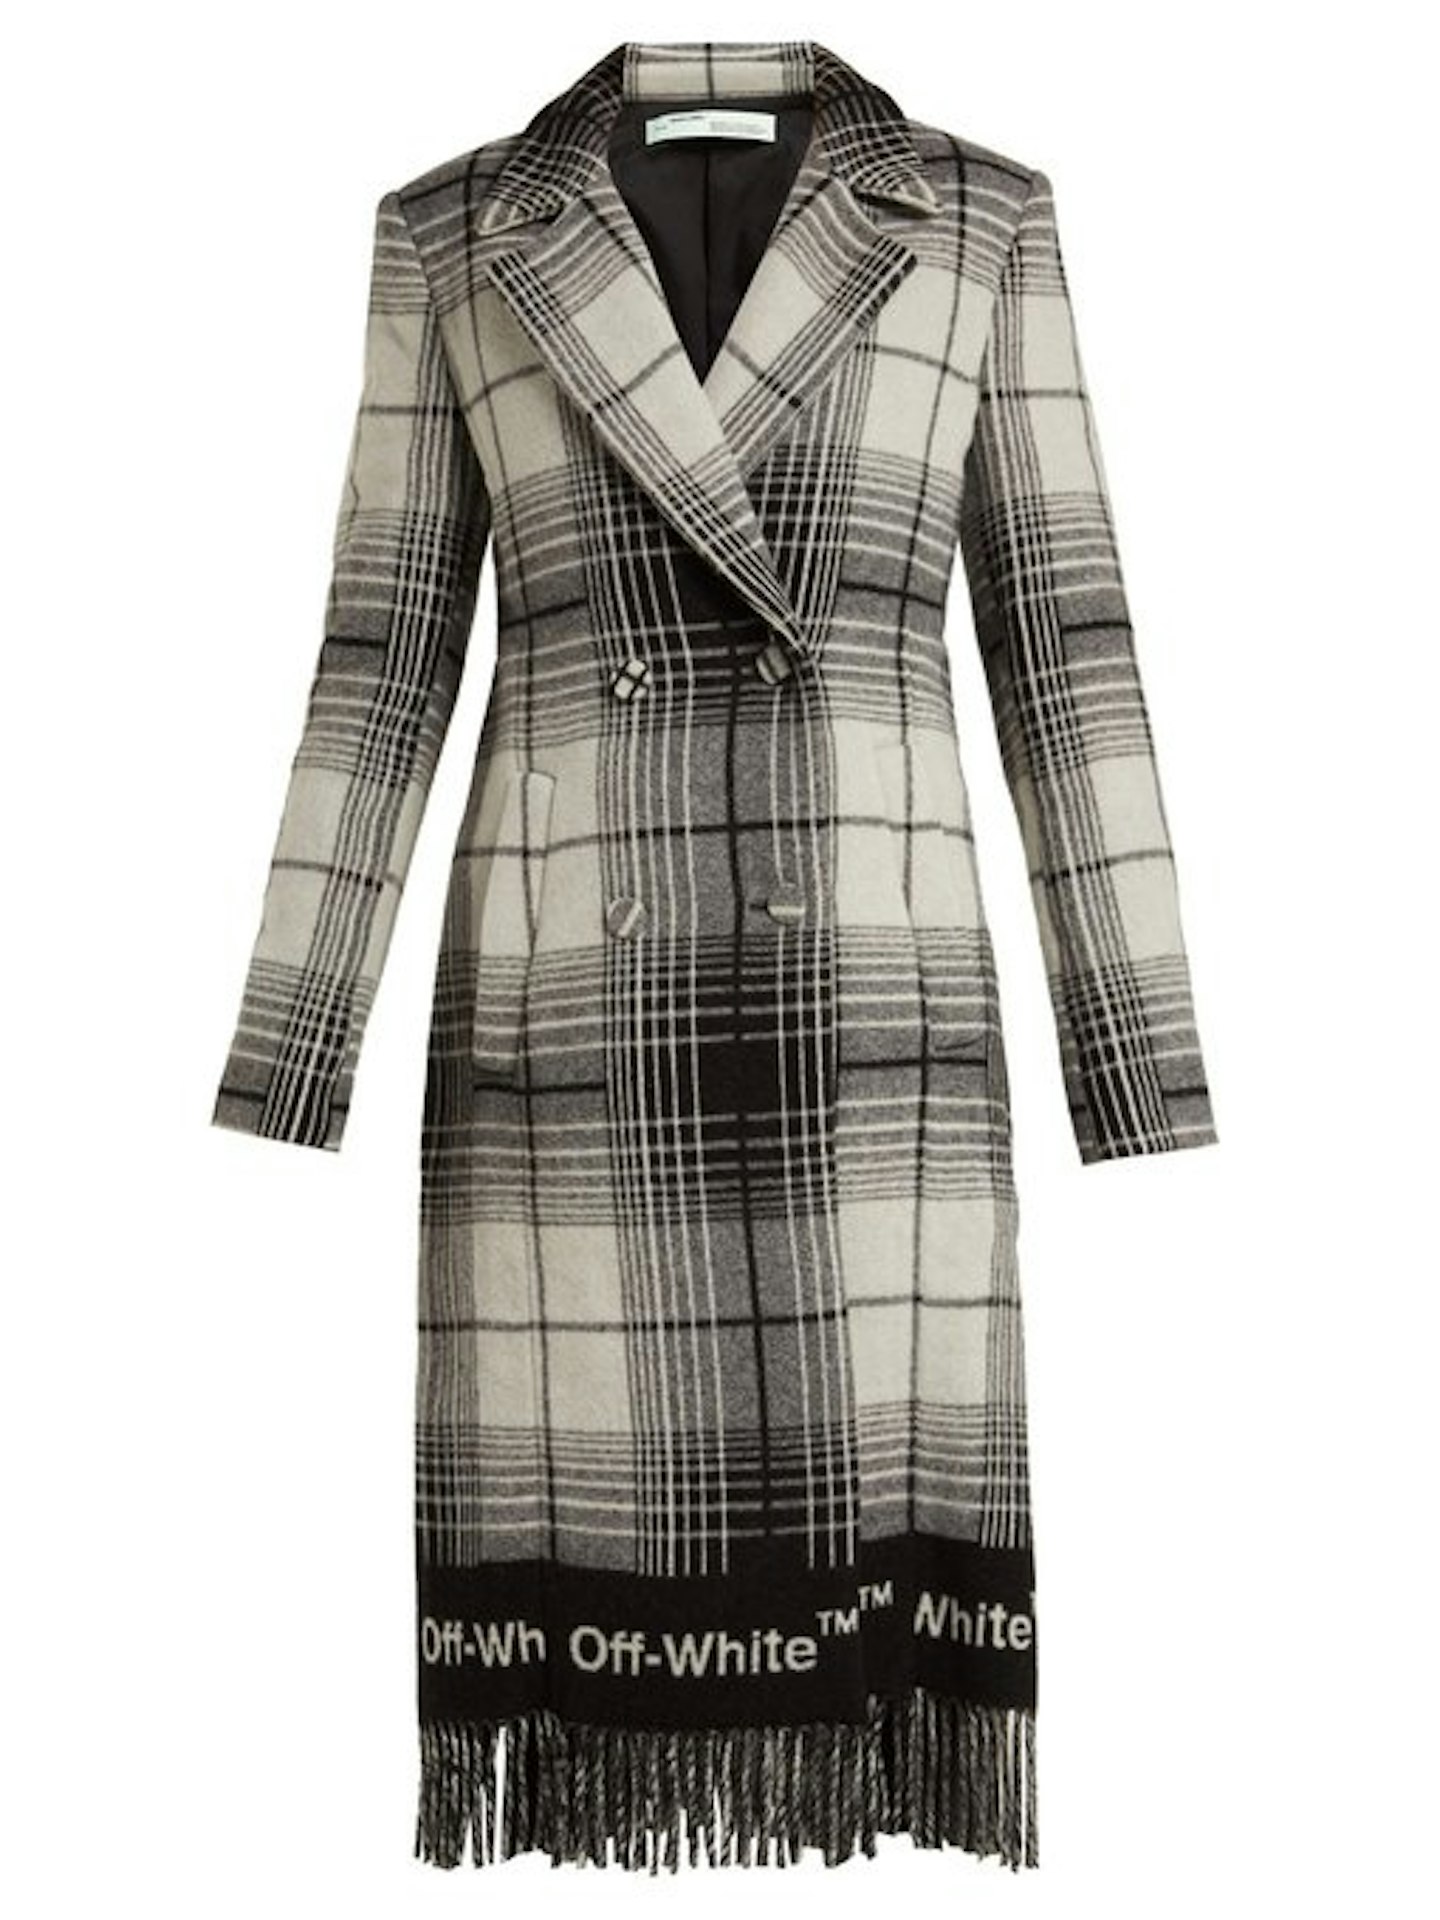 Off-White, Check Wool Blanket Coat, £1635, Matchesfashion.com